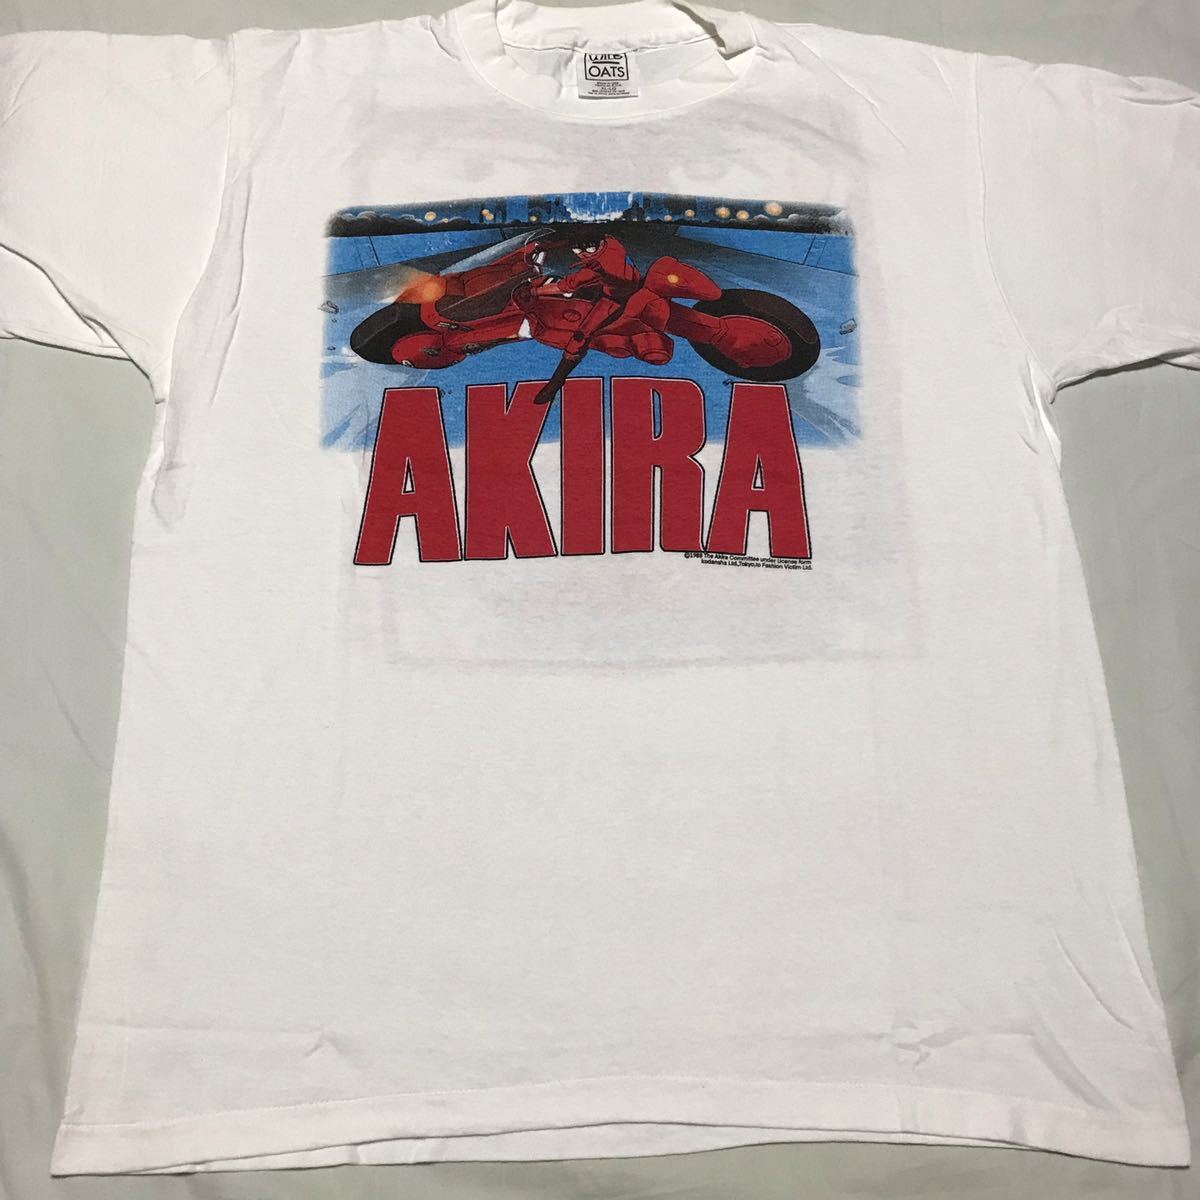 USA製 AKIRA アキラ tee Tシャツ 1988年コピーライト ヴィンテージ